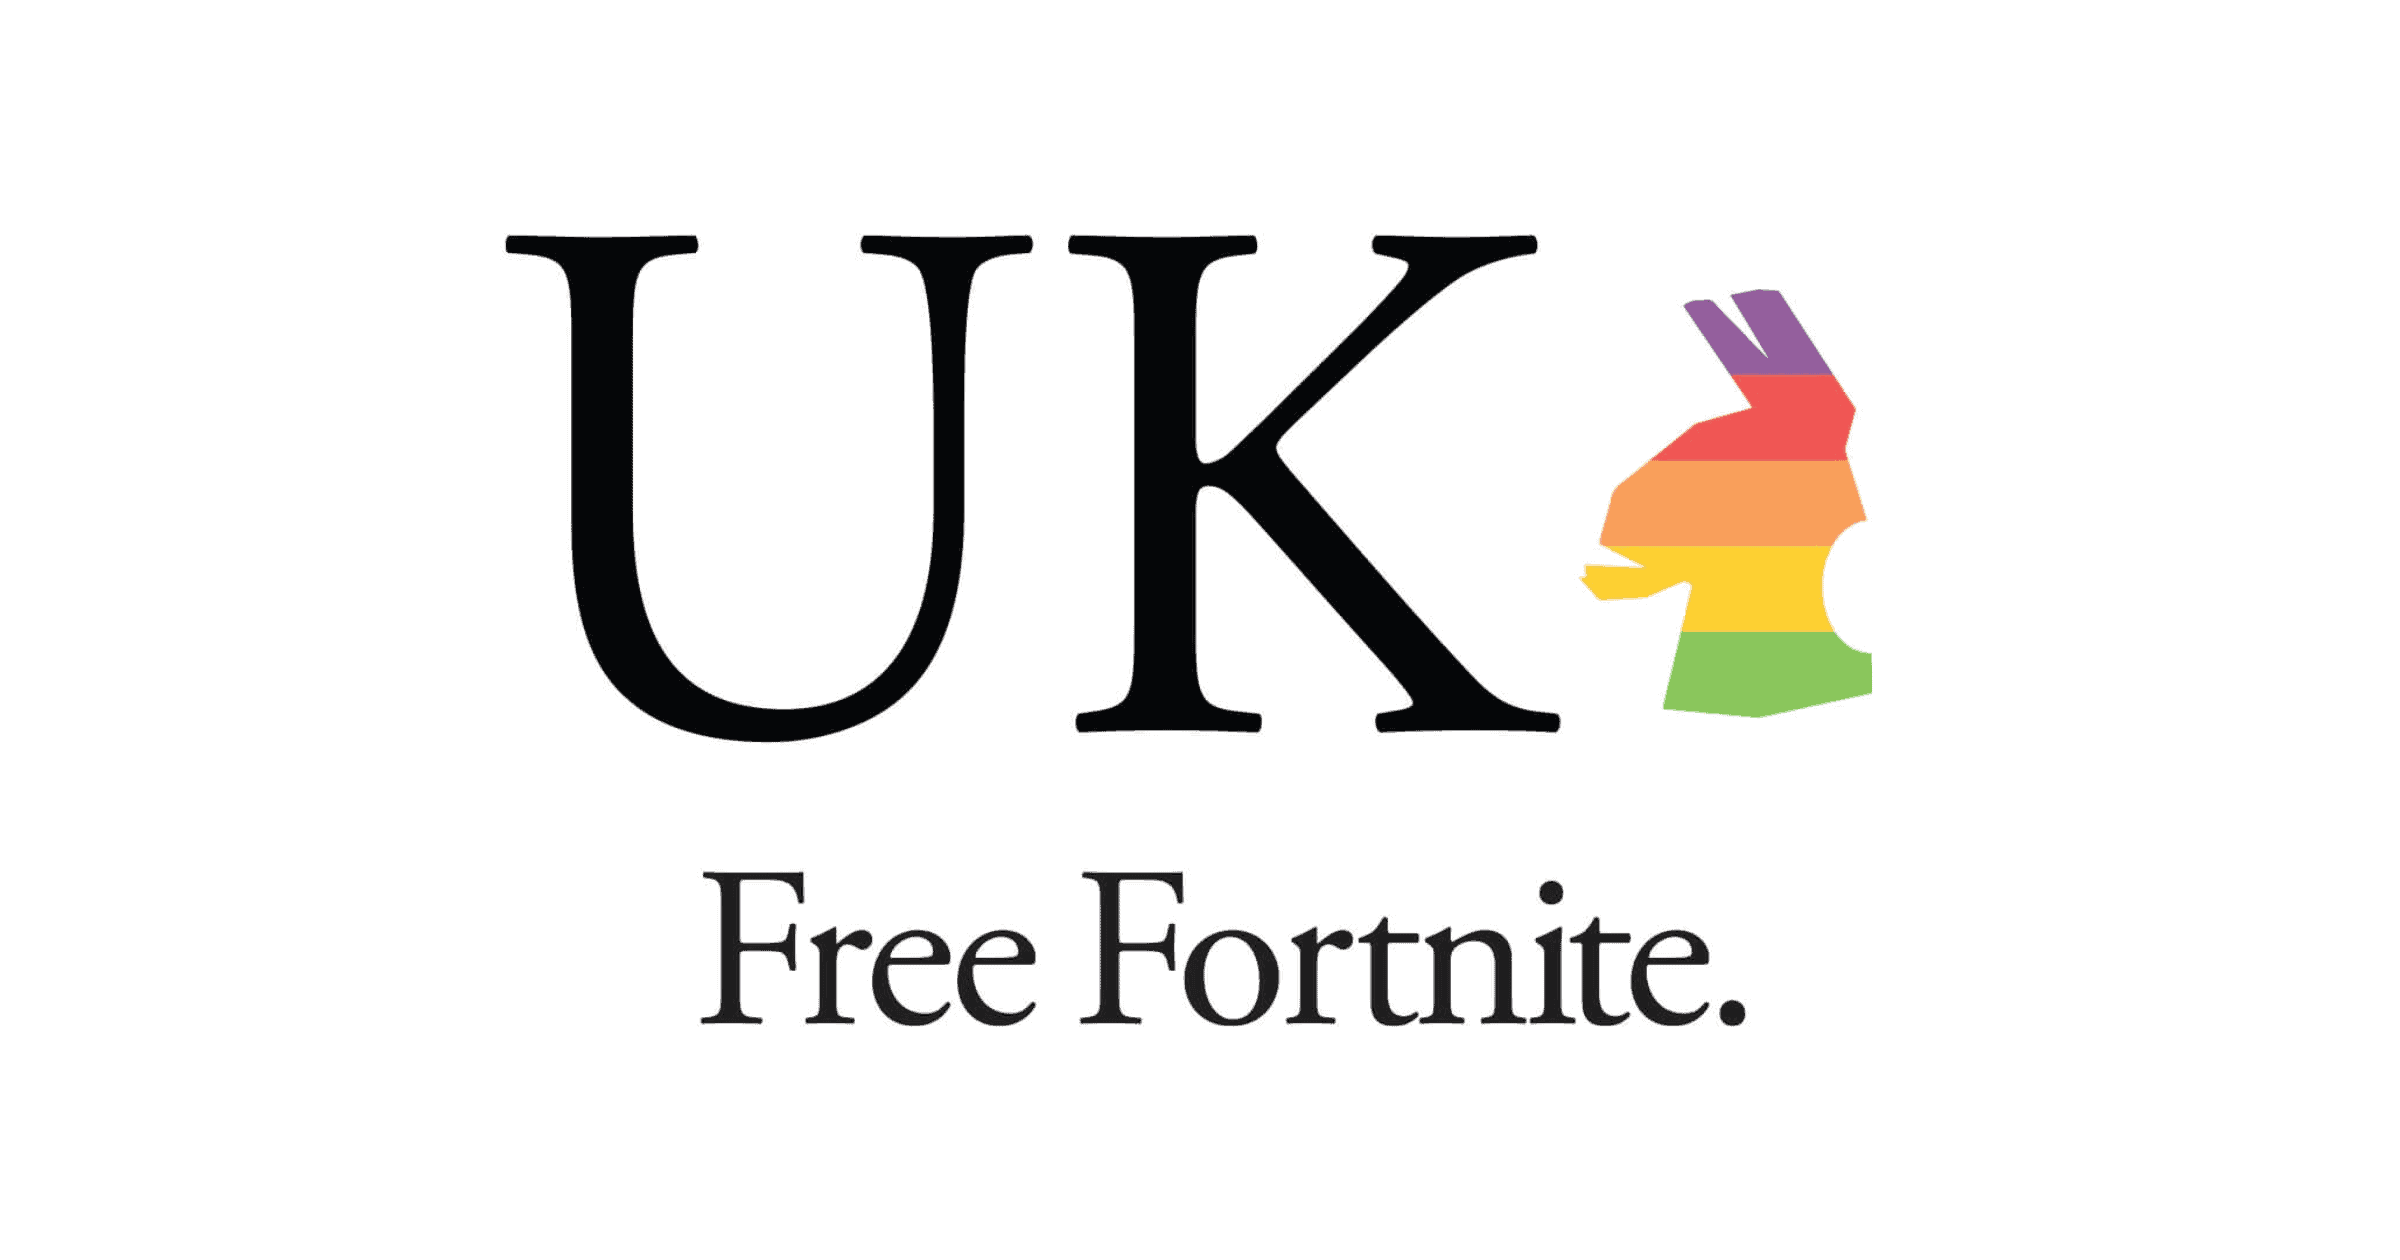 Epic Games UK Free Fortnite anti-Apple logo